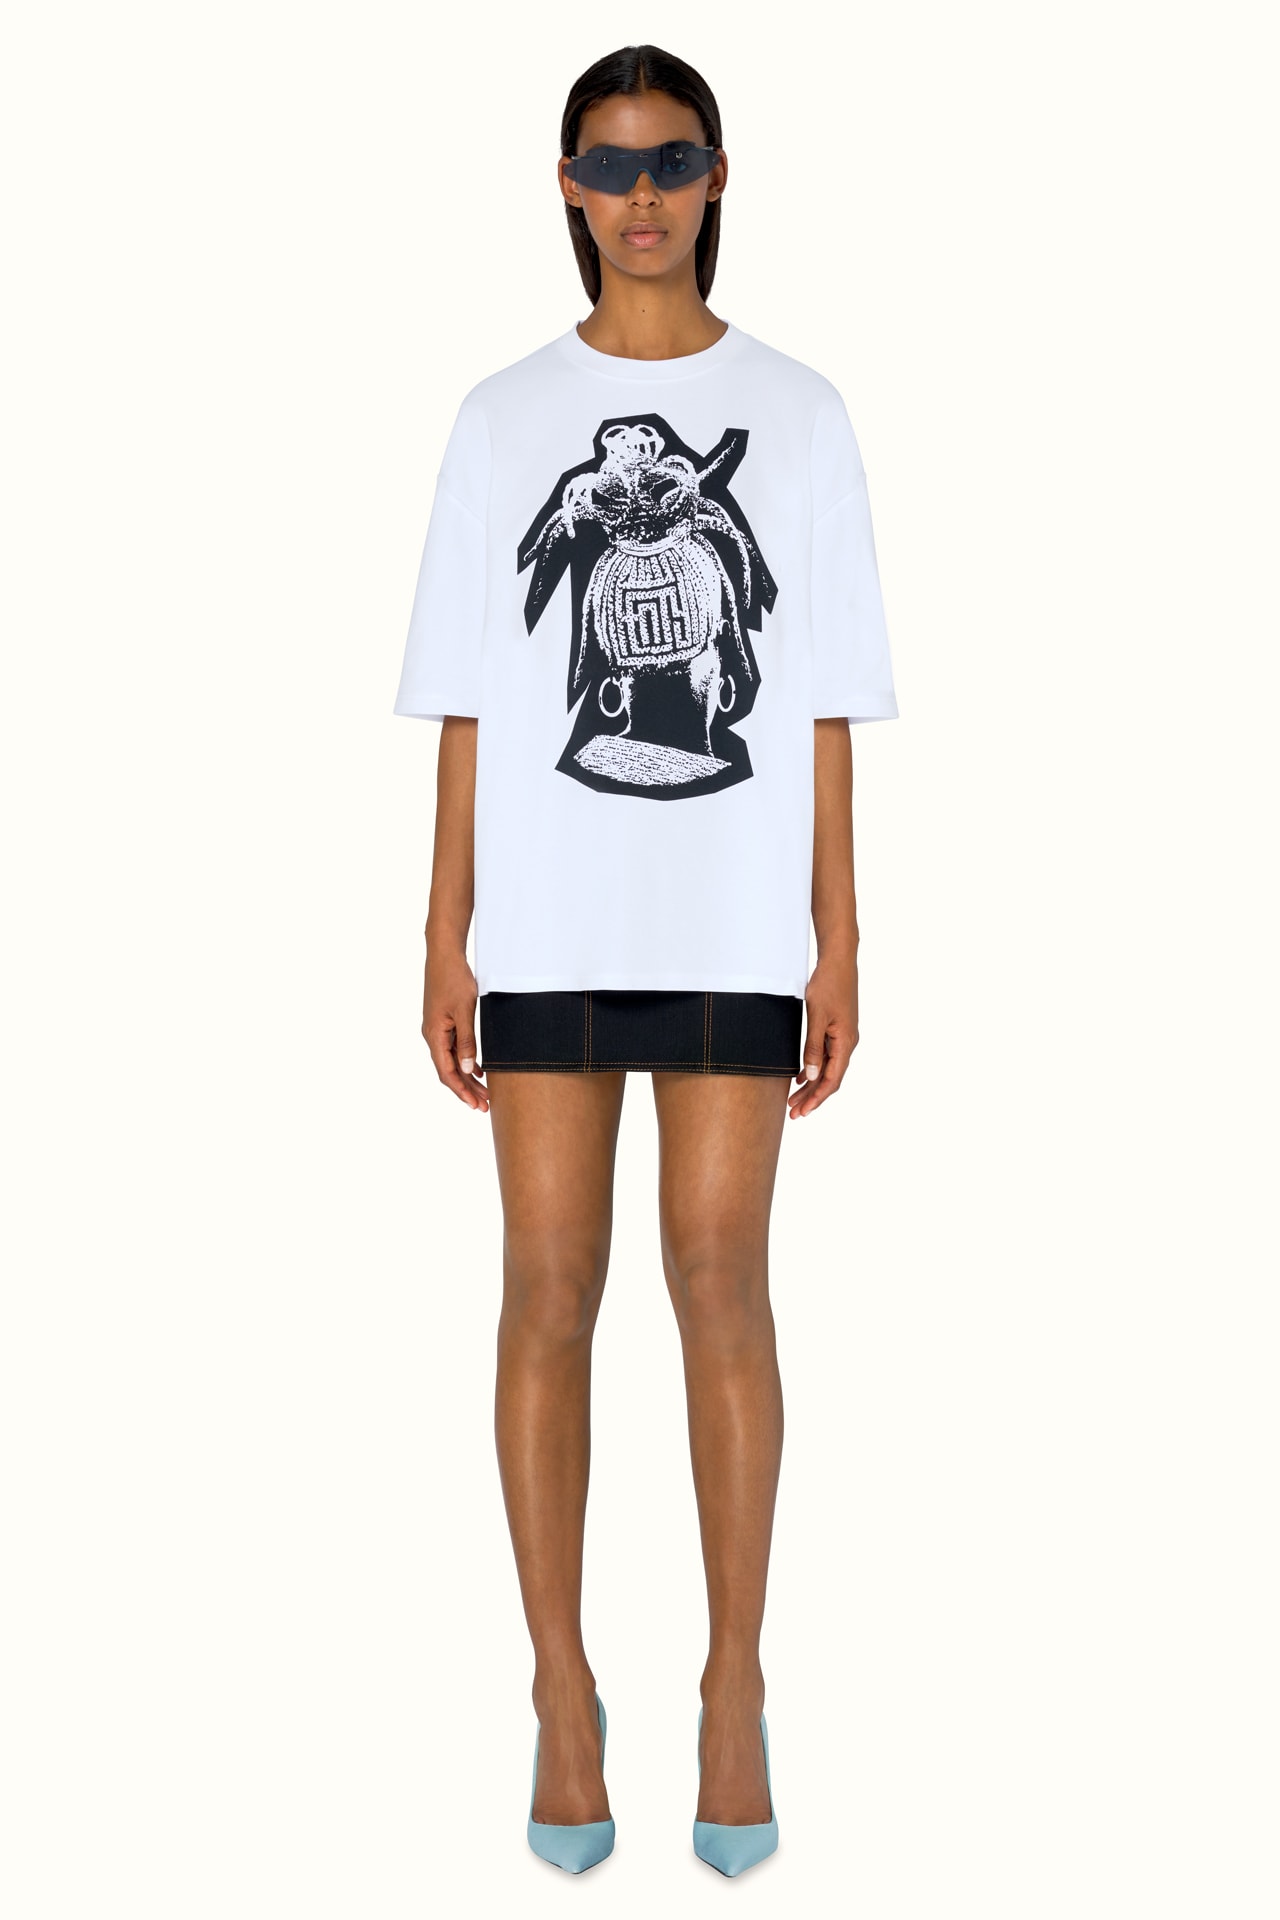 FENTY Rihanna Release 9-19 Collection Lookbook Shirt White Skirt Black